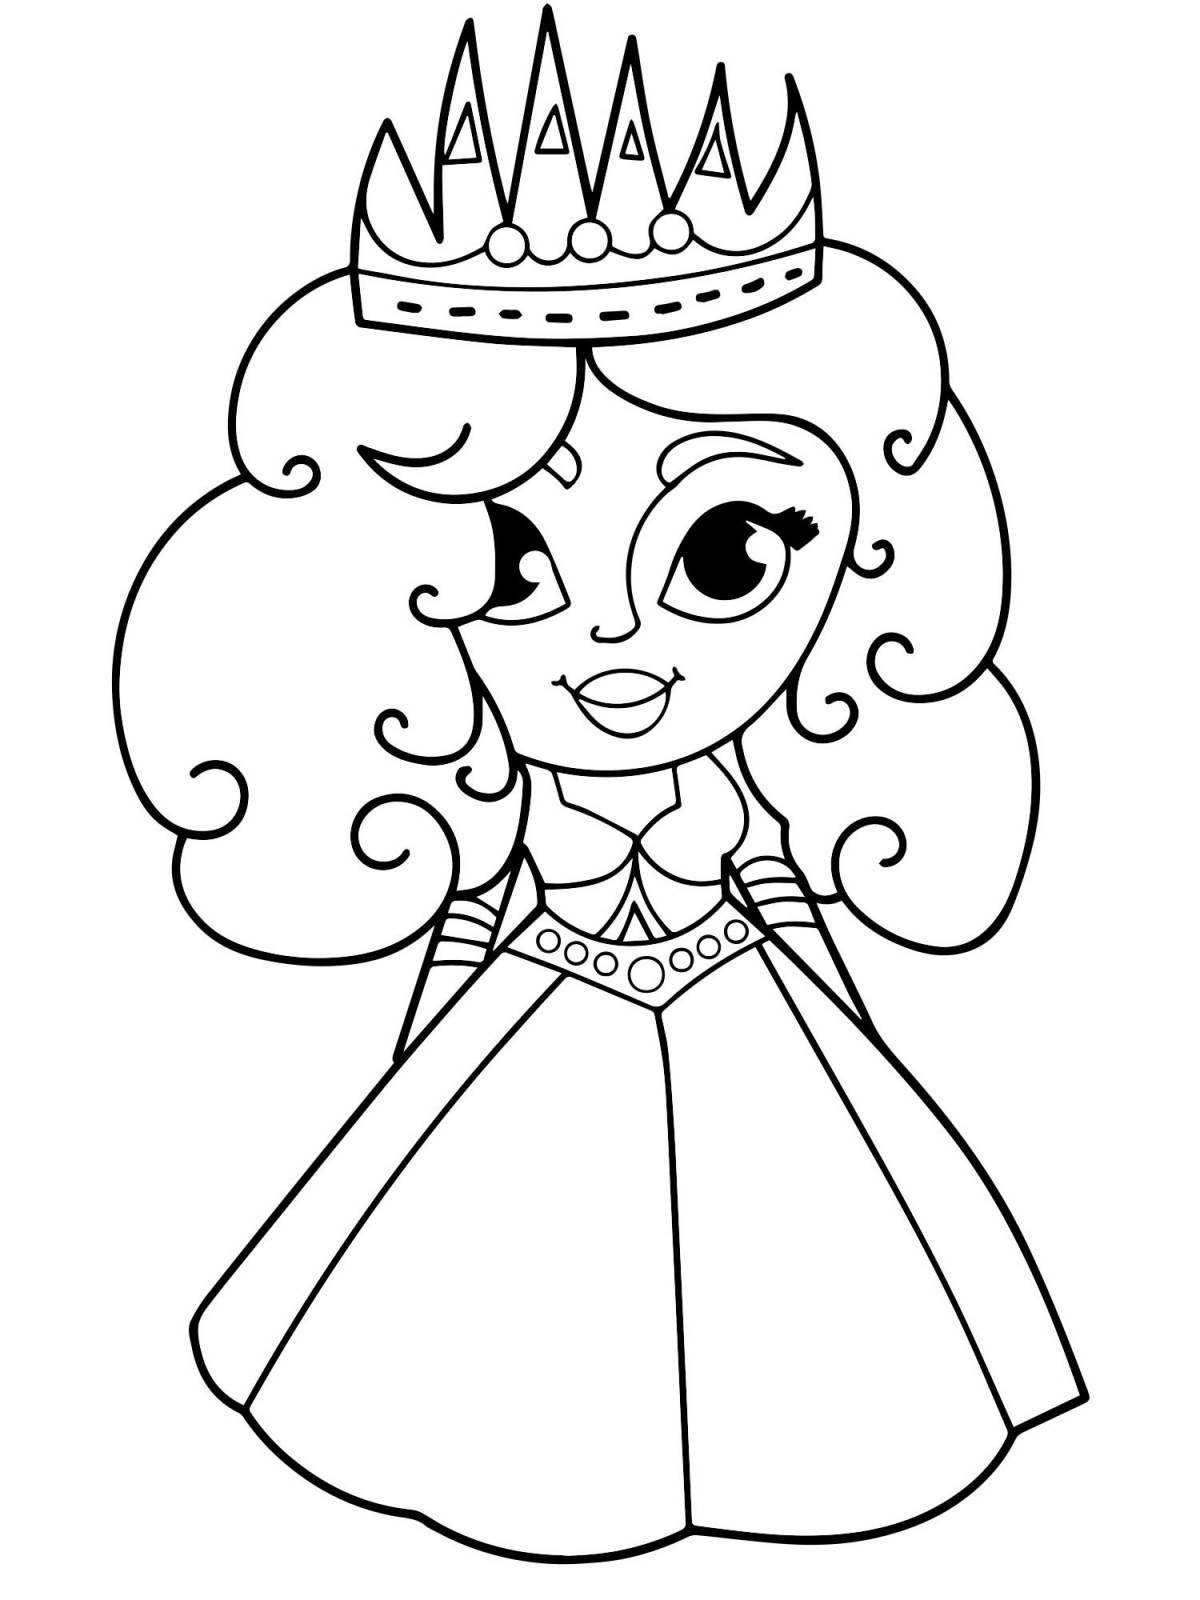 Crown princess #4